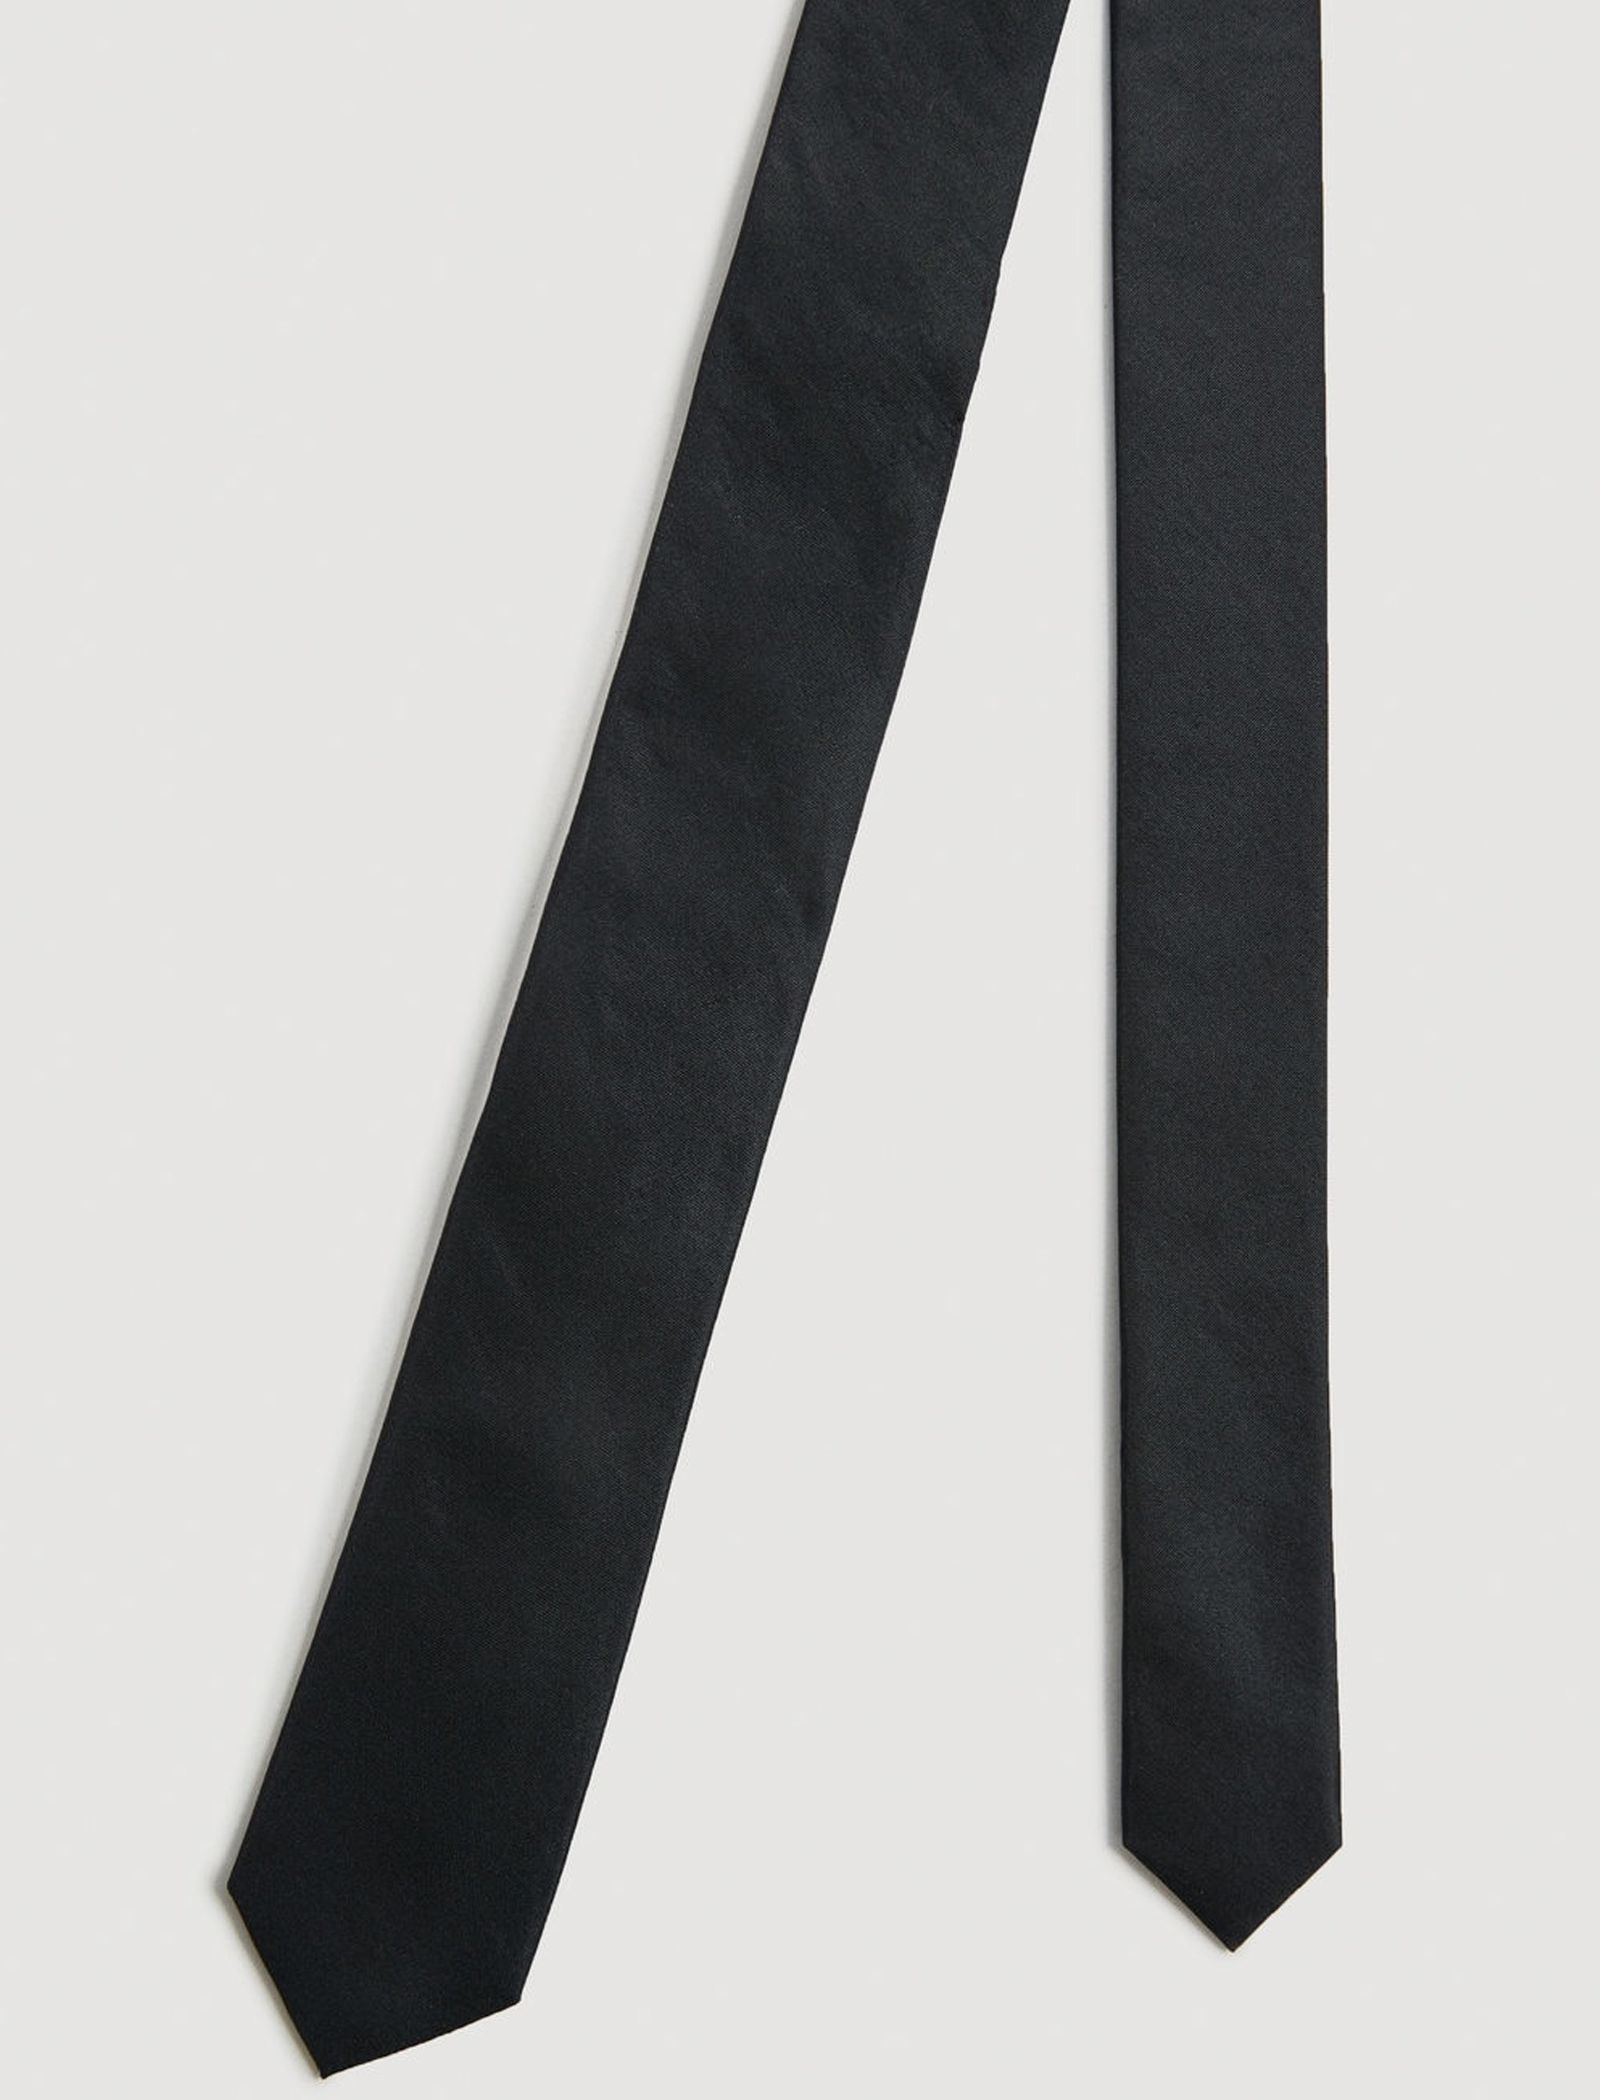 کراوات مانگو مدل 23063048 تک سایز - مشکي  - 3